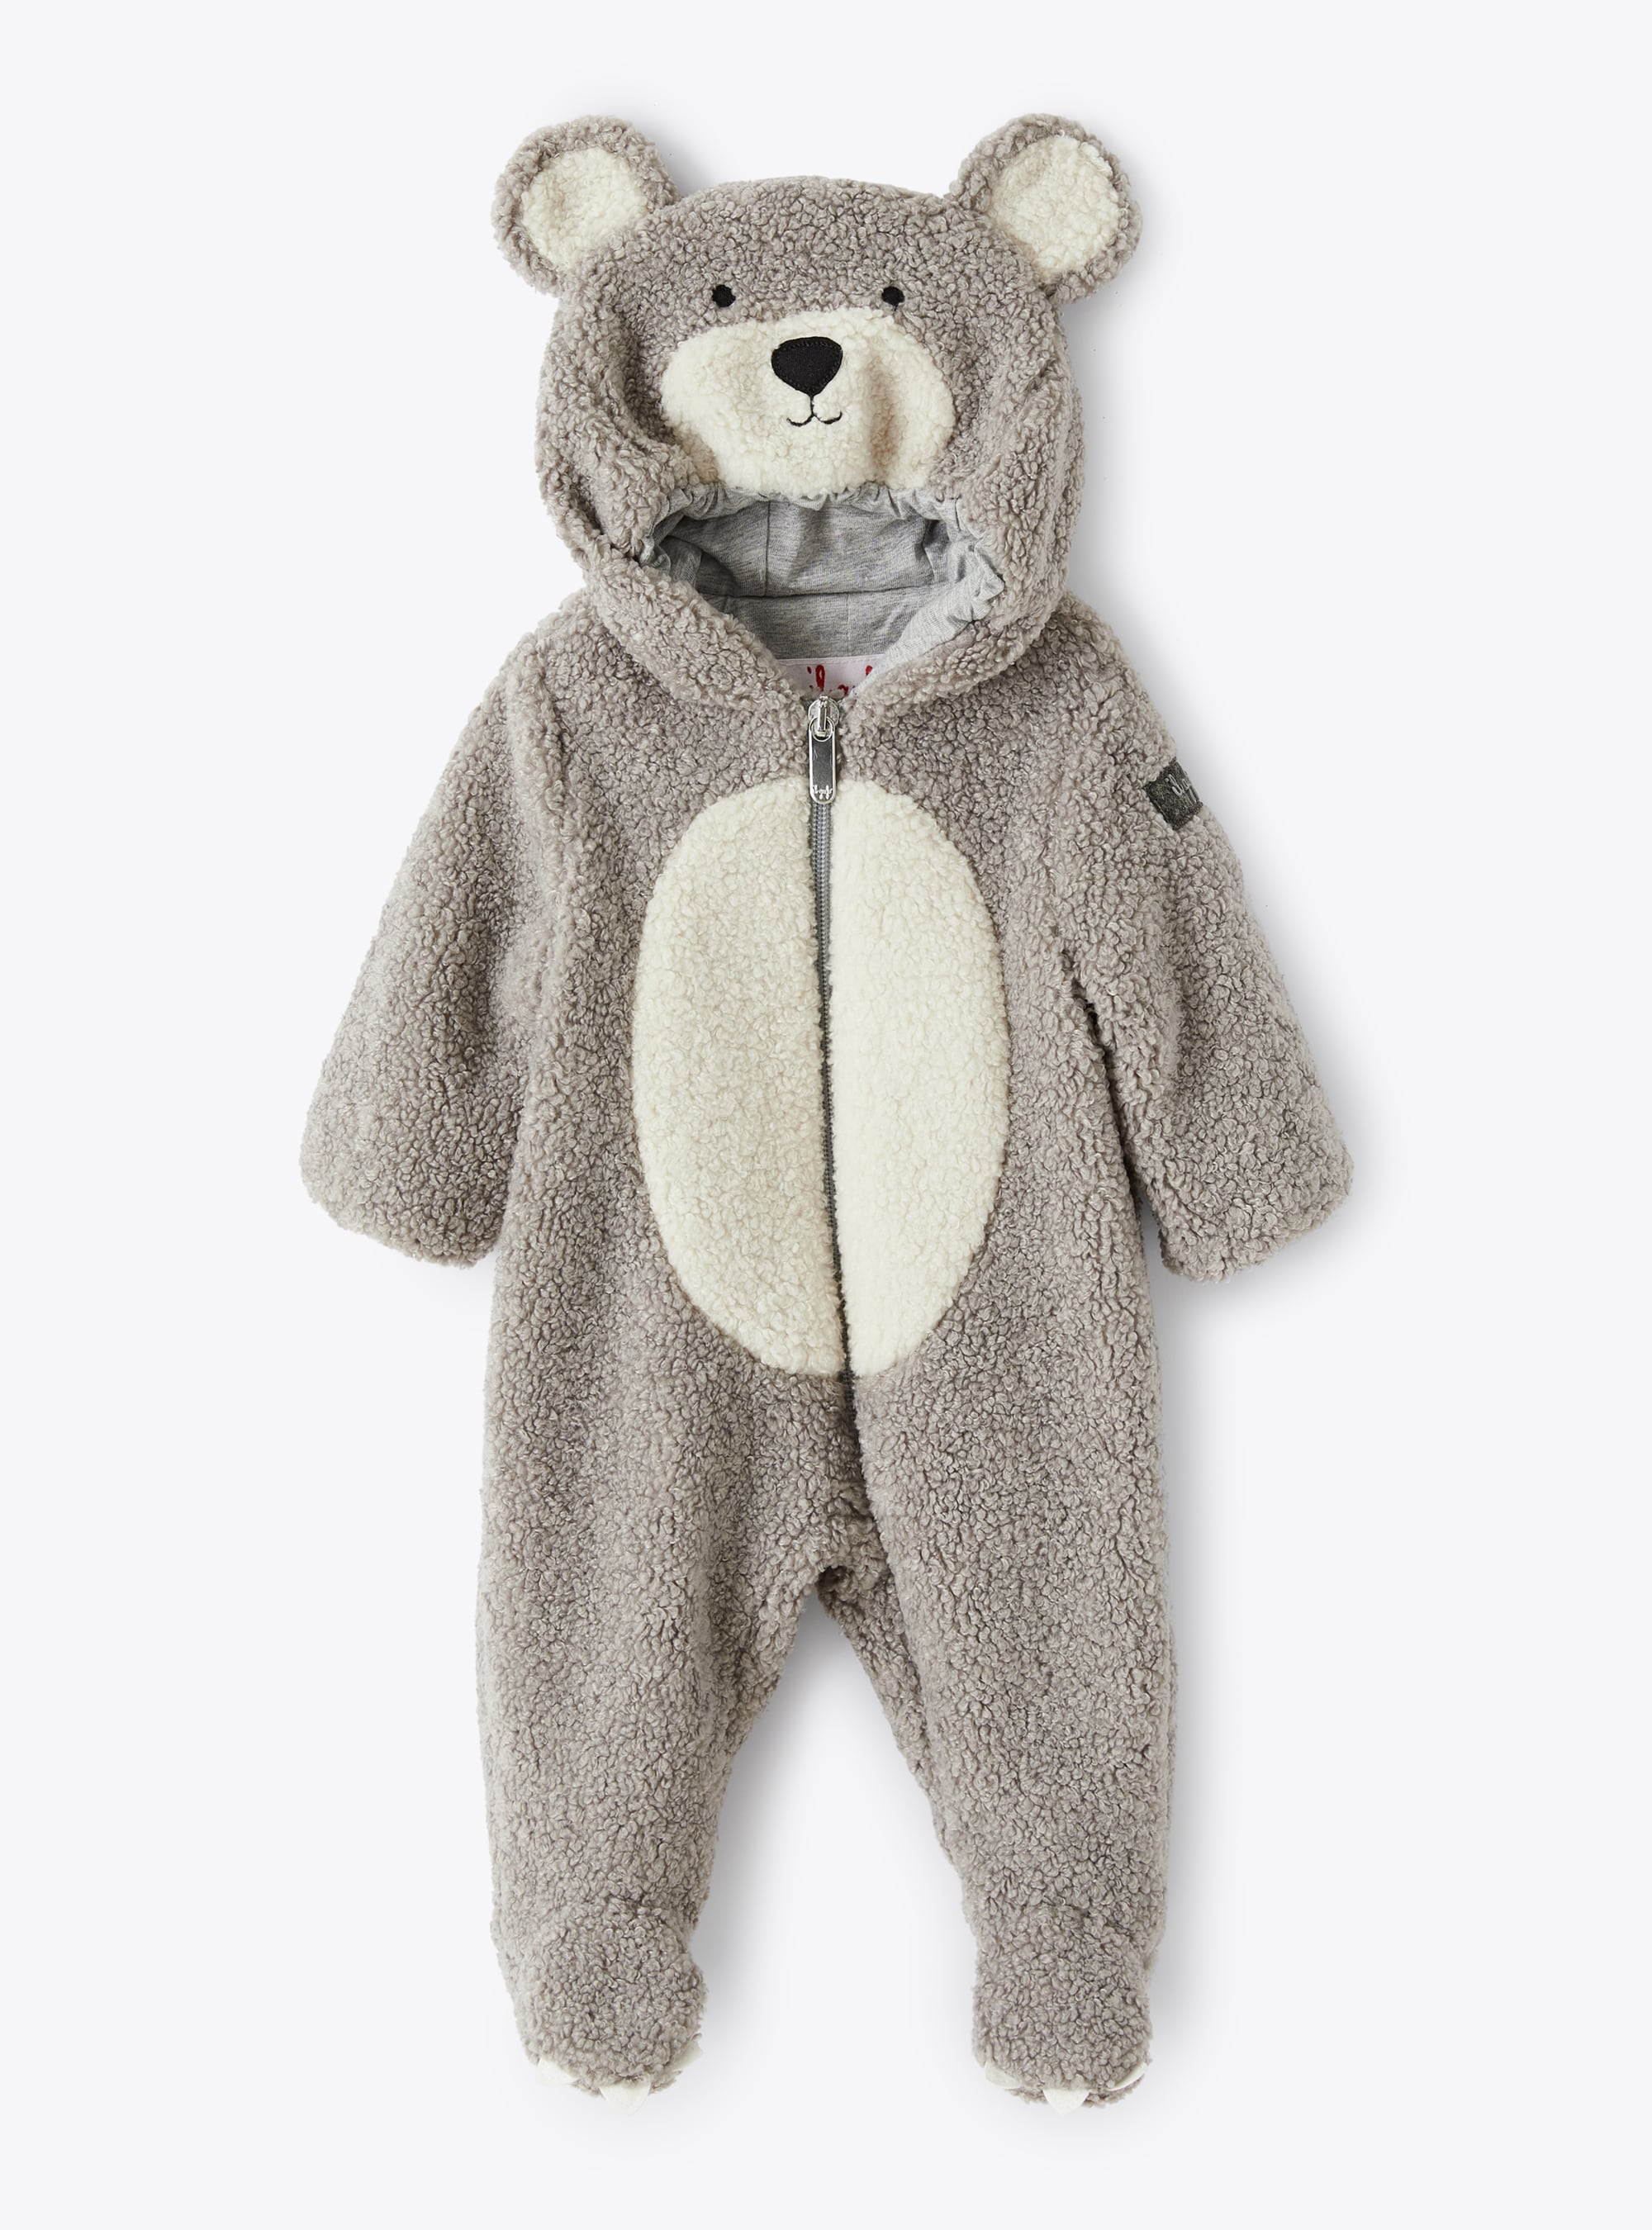 Teddy bear baby snowsuit in grey teddy fleece - Babygrows - Il Gufo